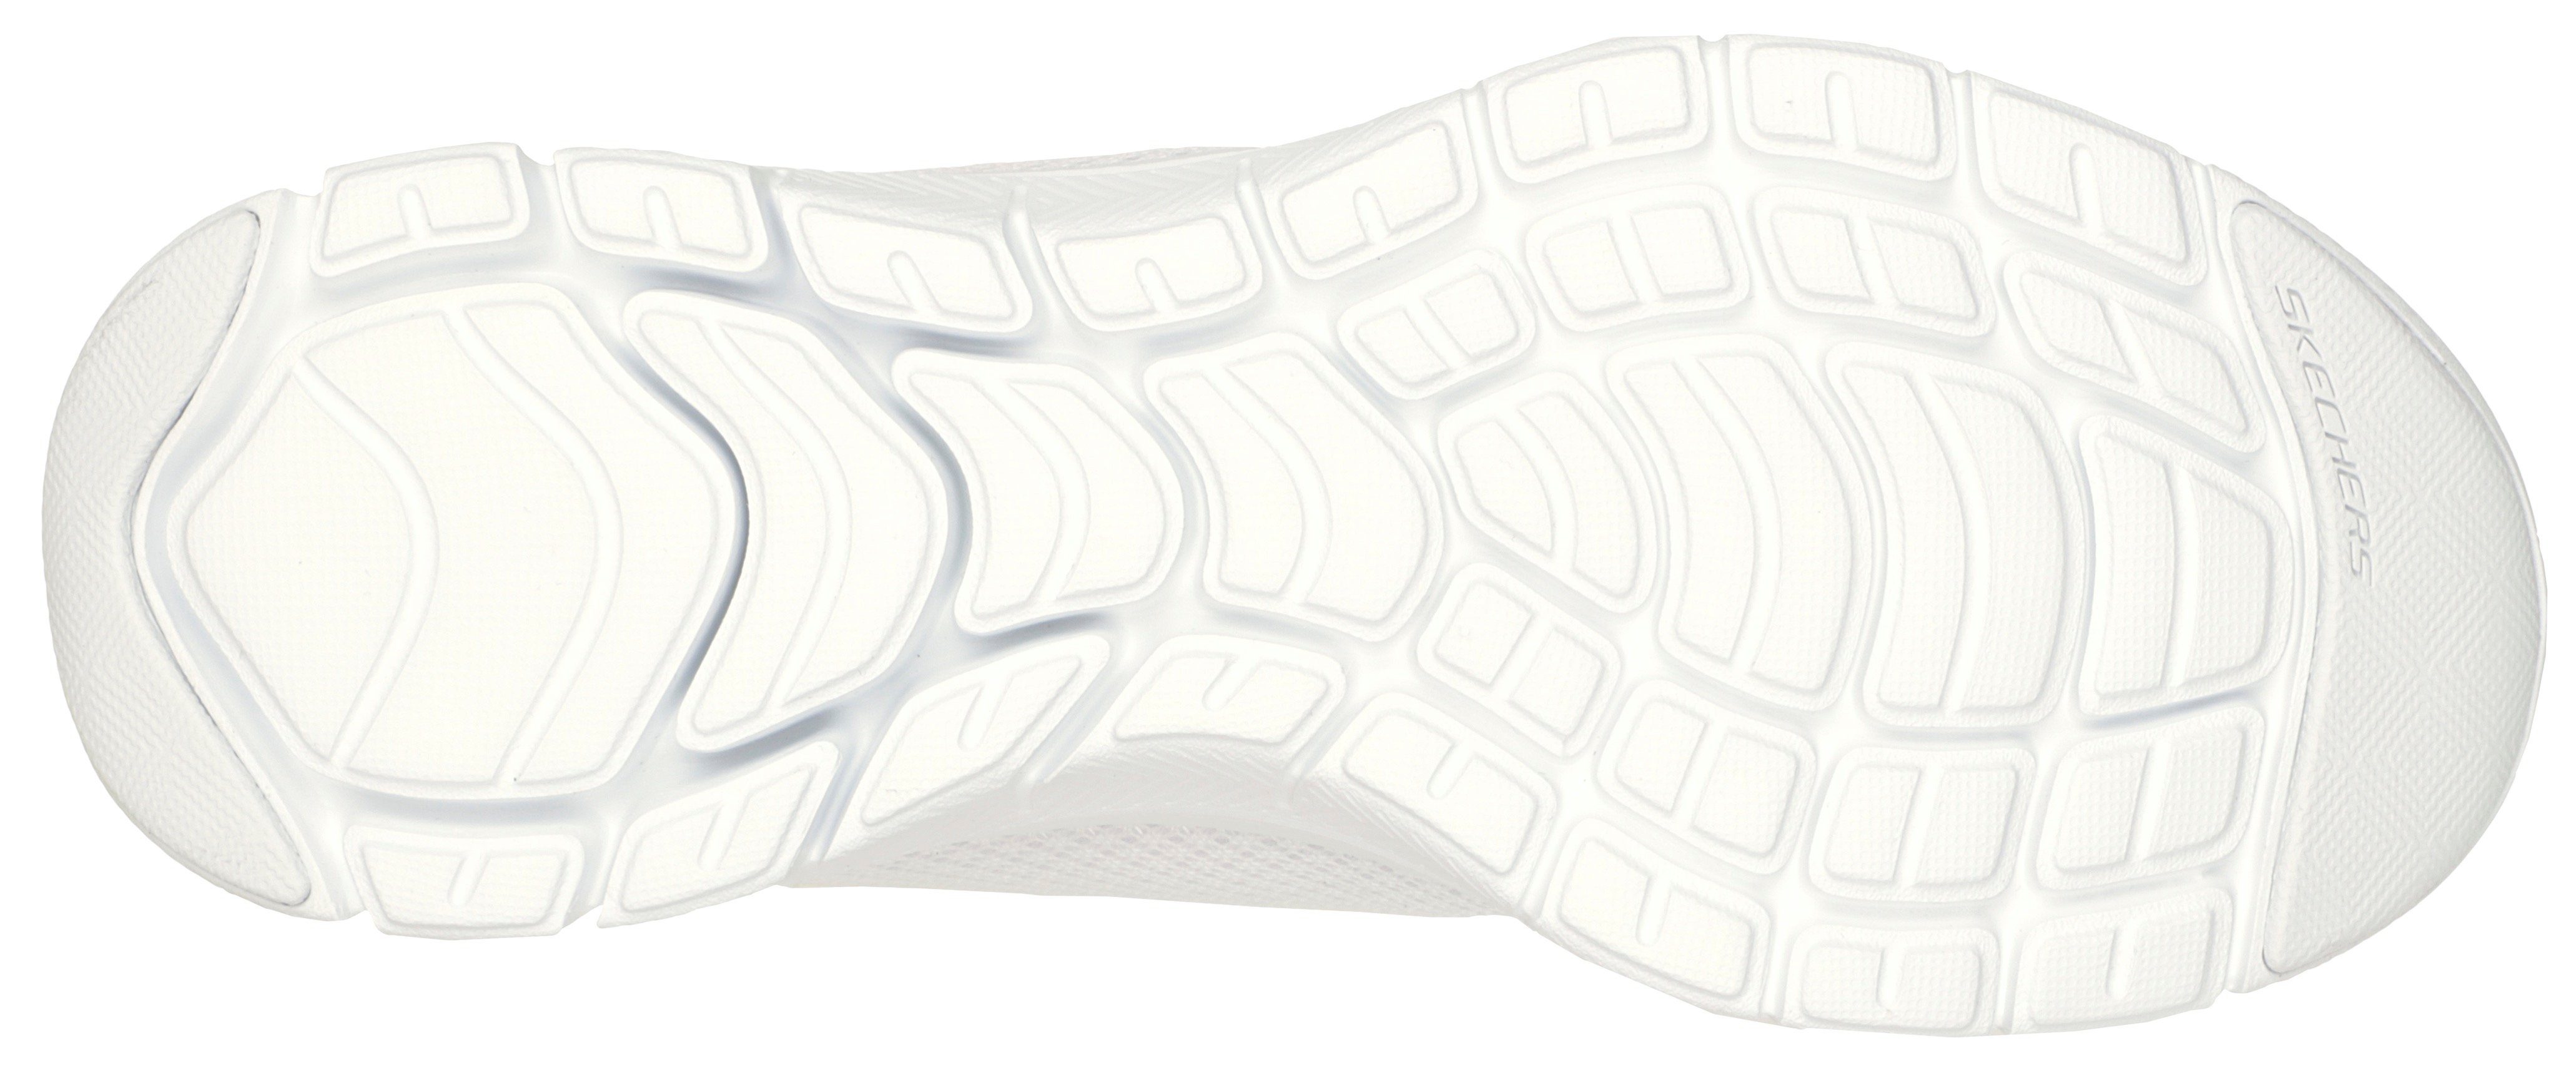 FLEX Sneaker APPEAL 4.0 Foam Ausstattung BRILLINAT VIEW Skechers offwhite Memory Air-Cooled mit